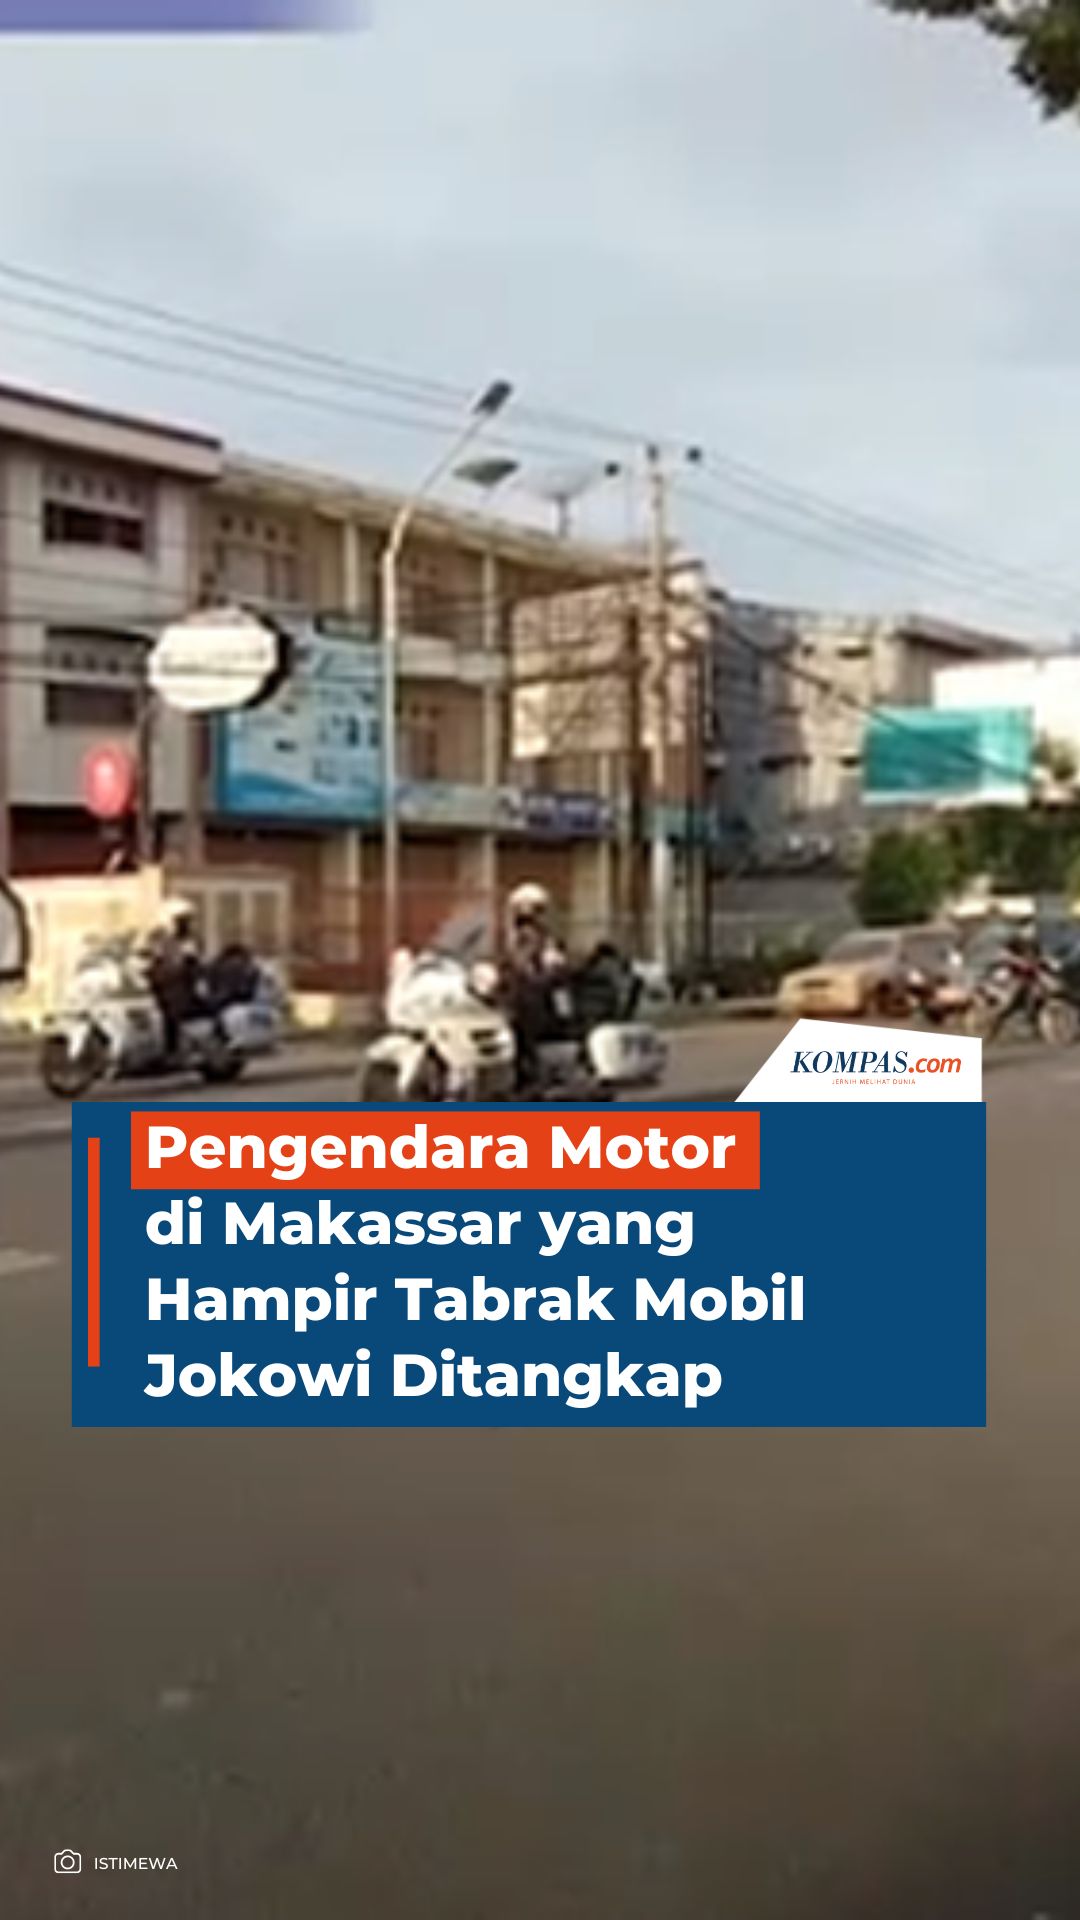 Pengendara Motor di Makassar yang Hampir Tabrak Mobil Jokowi Ditangkap